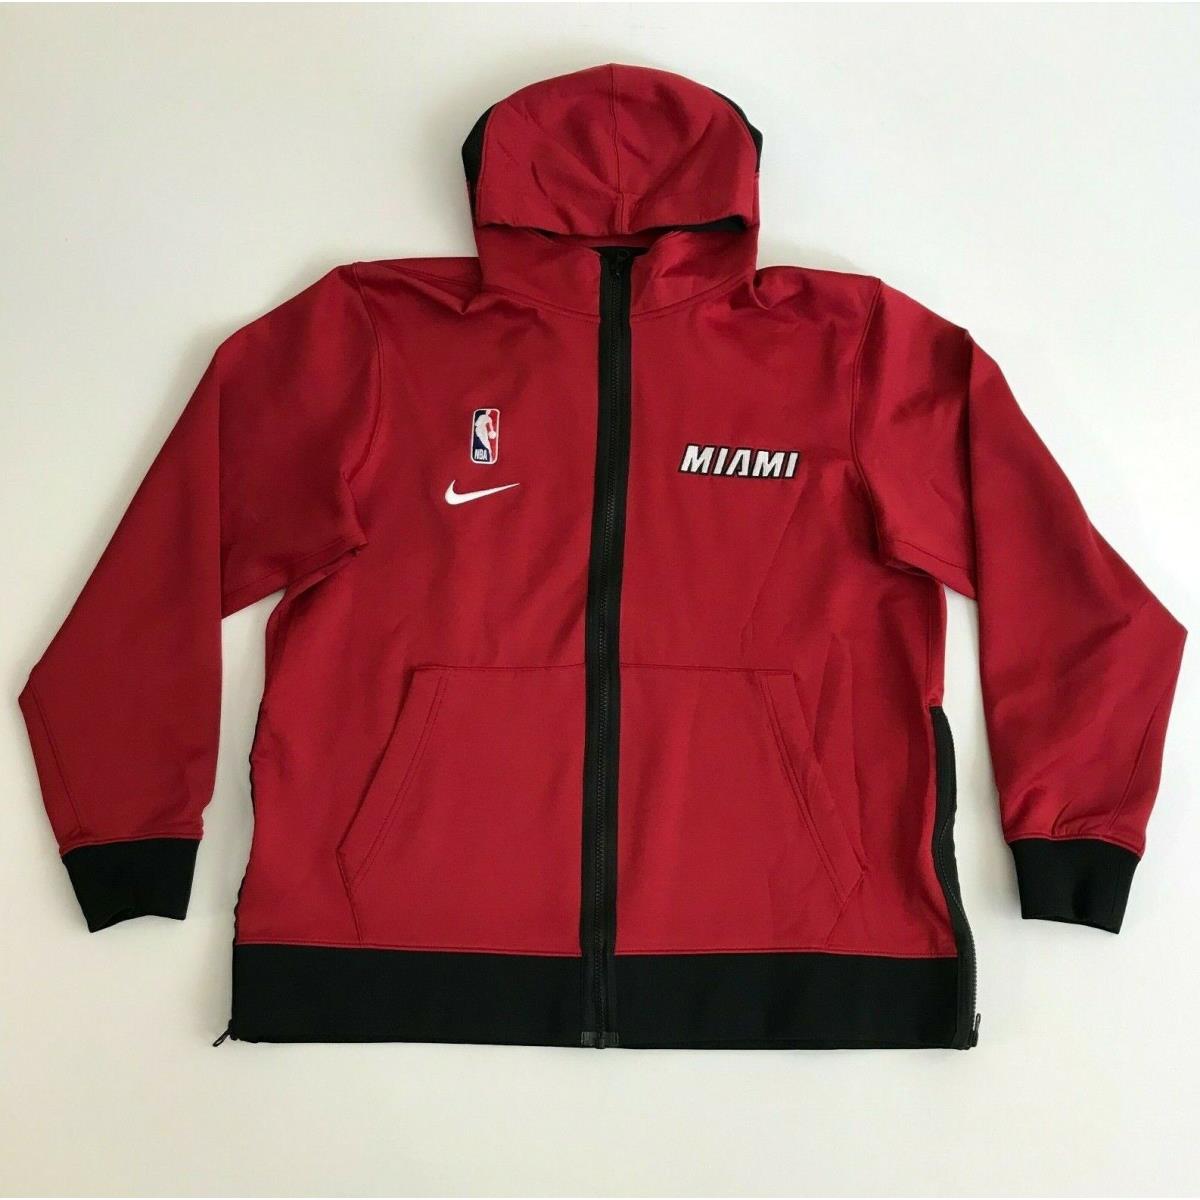 Nike Hoodie Jacket Mens Medium Red Black White Miami Heat Therma Flex Zip